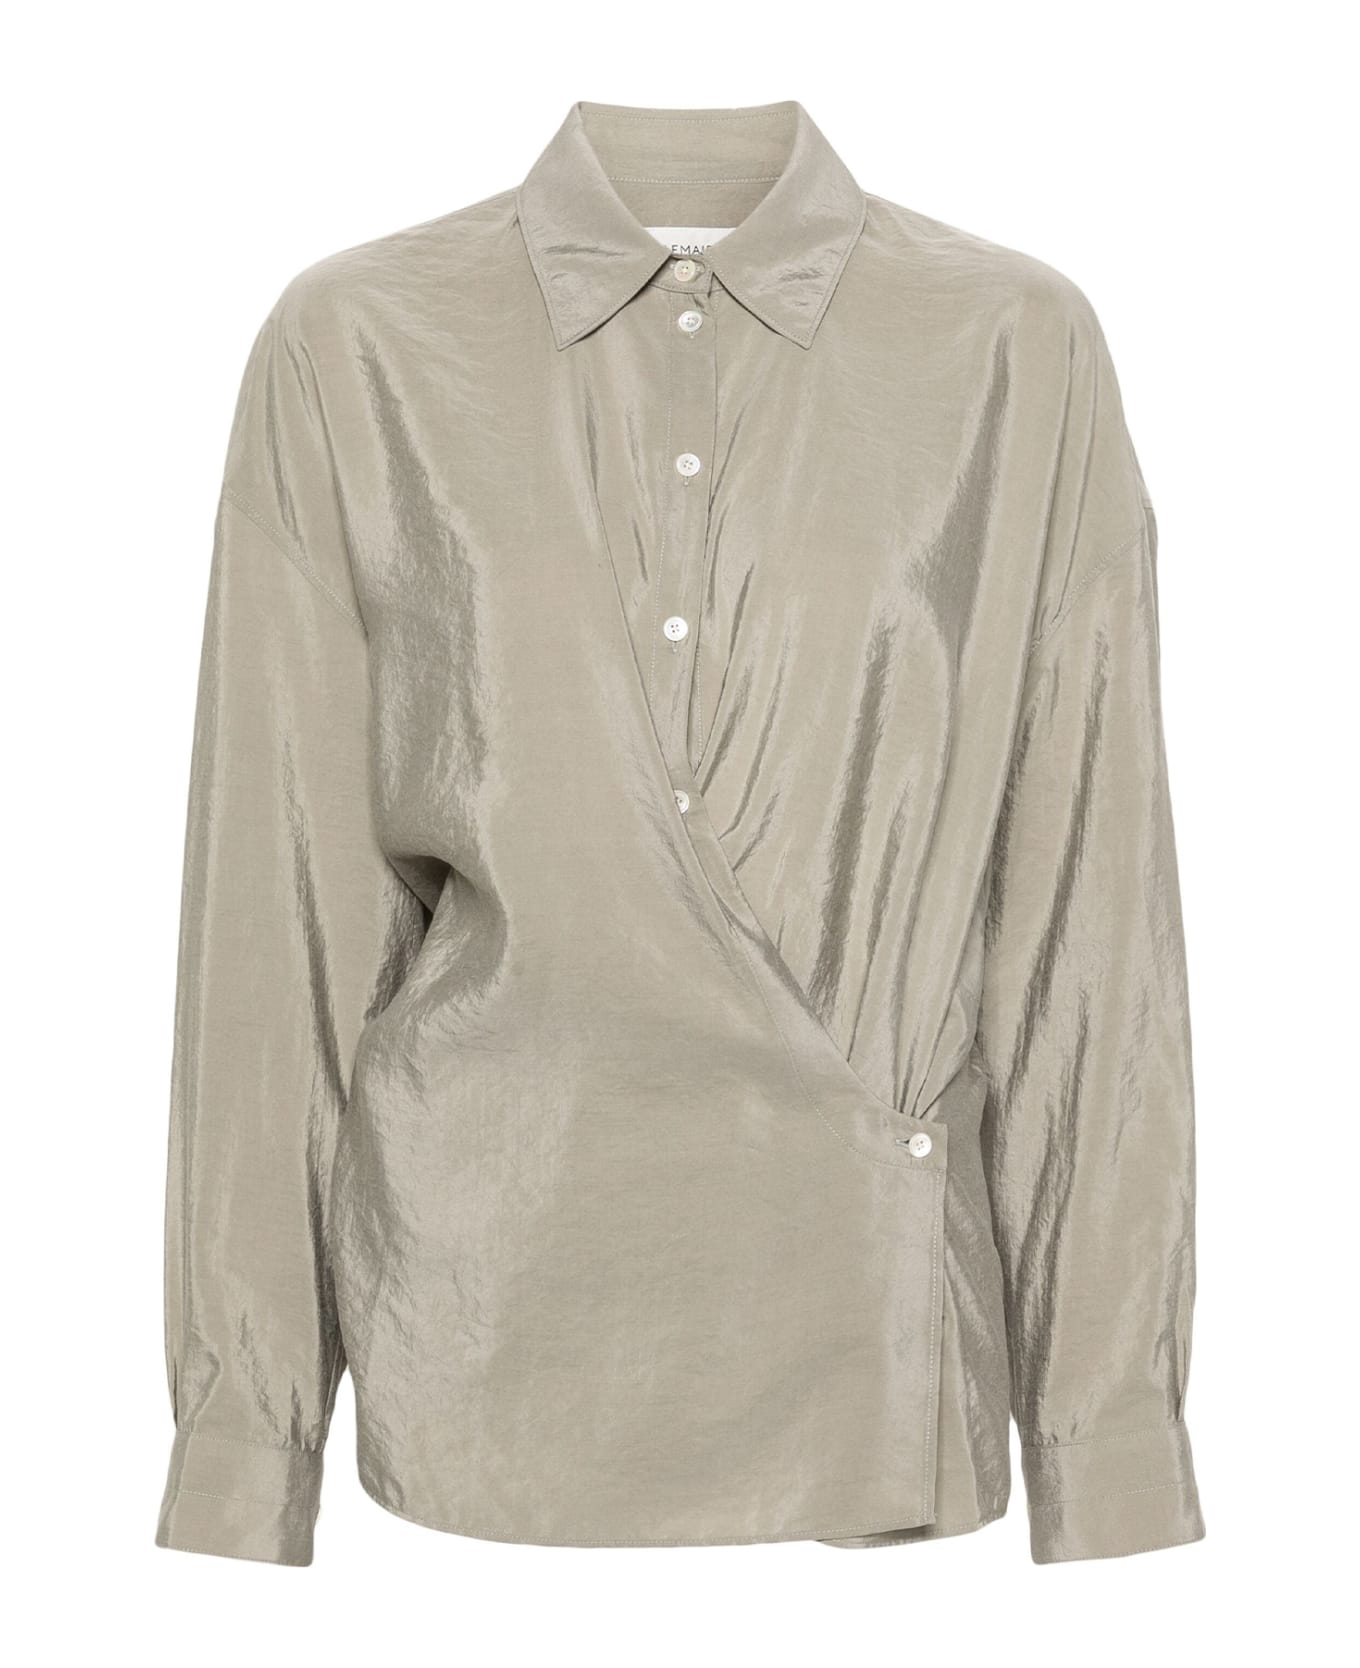 Lemaire Shirt - LIGHT MISTY GREY シャツ